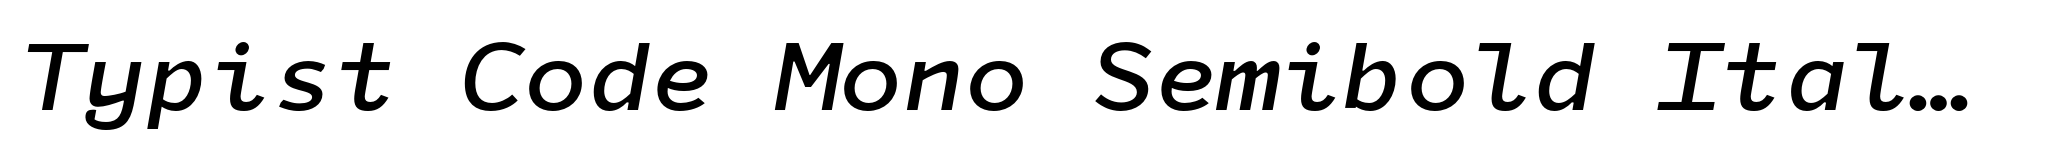 Typist Code Mono Semibold Italic image